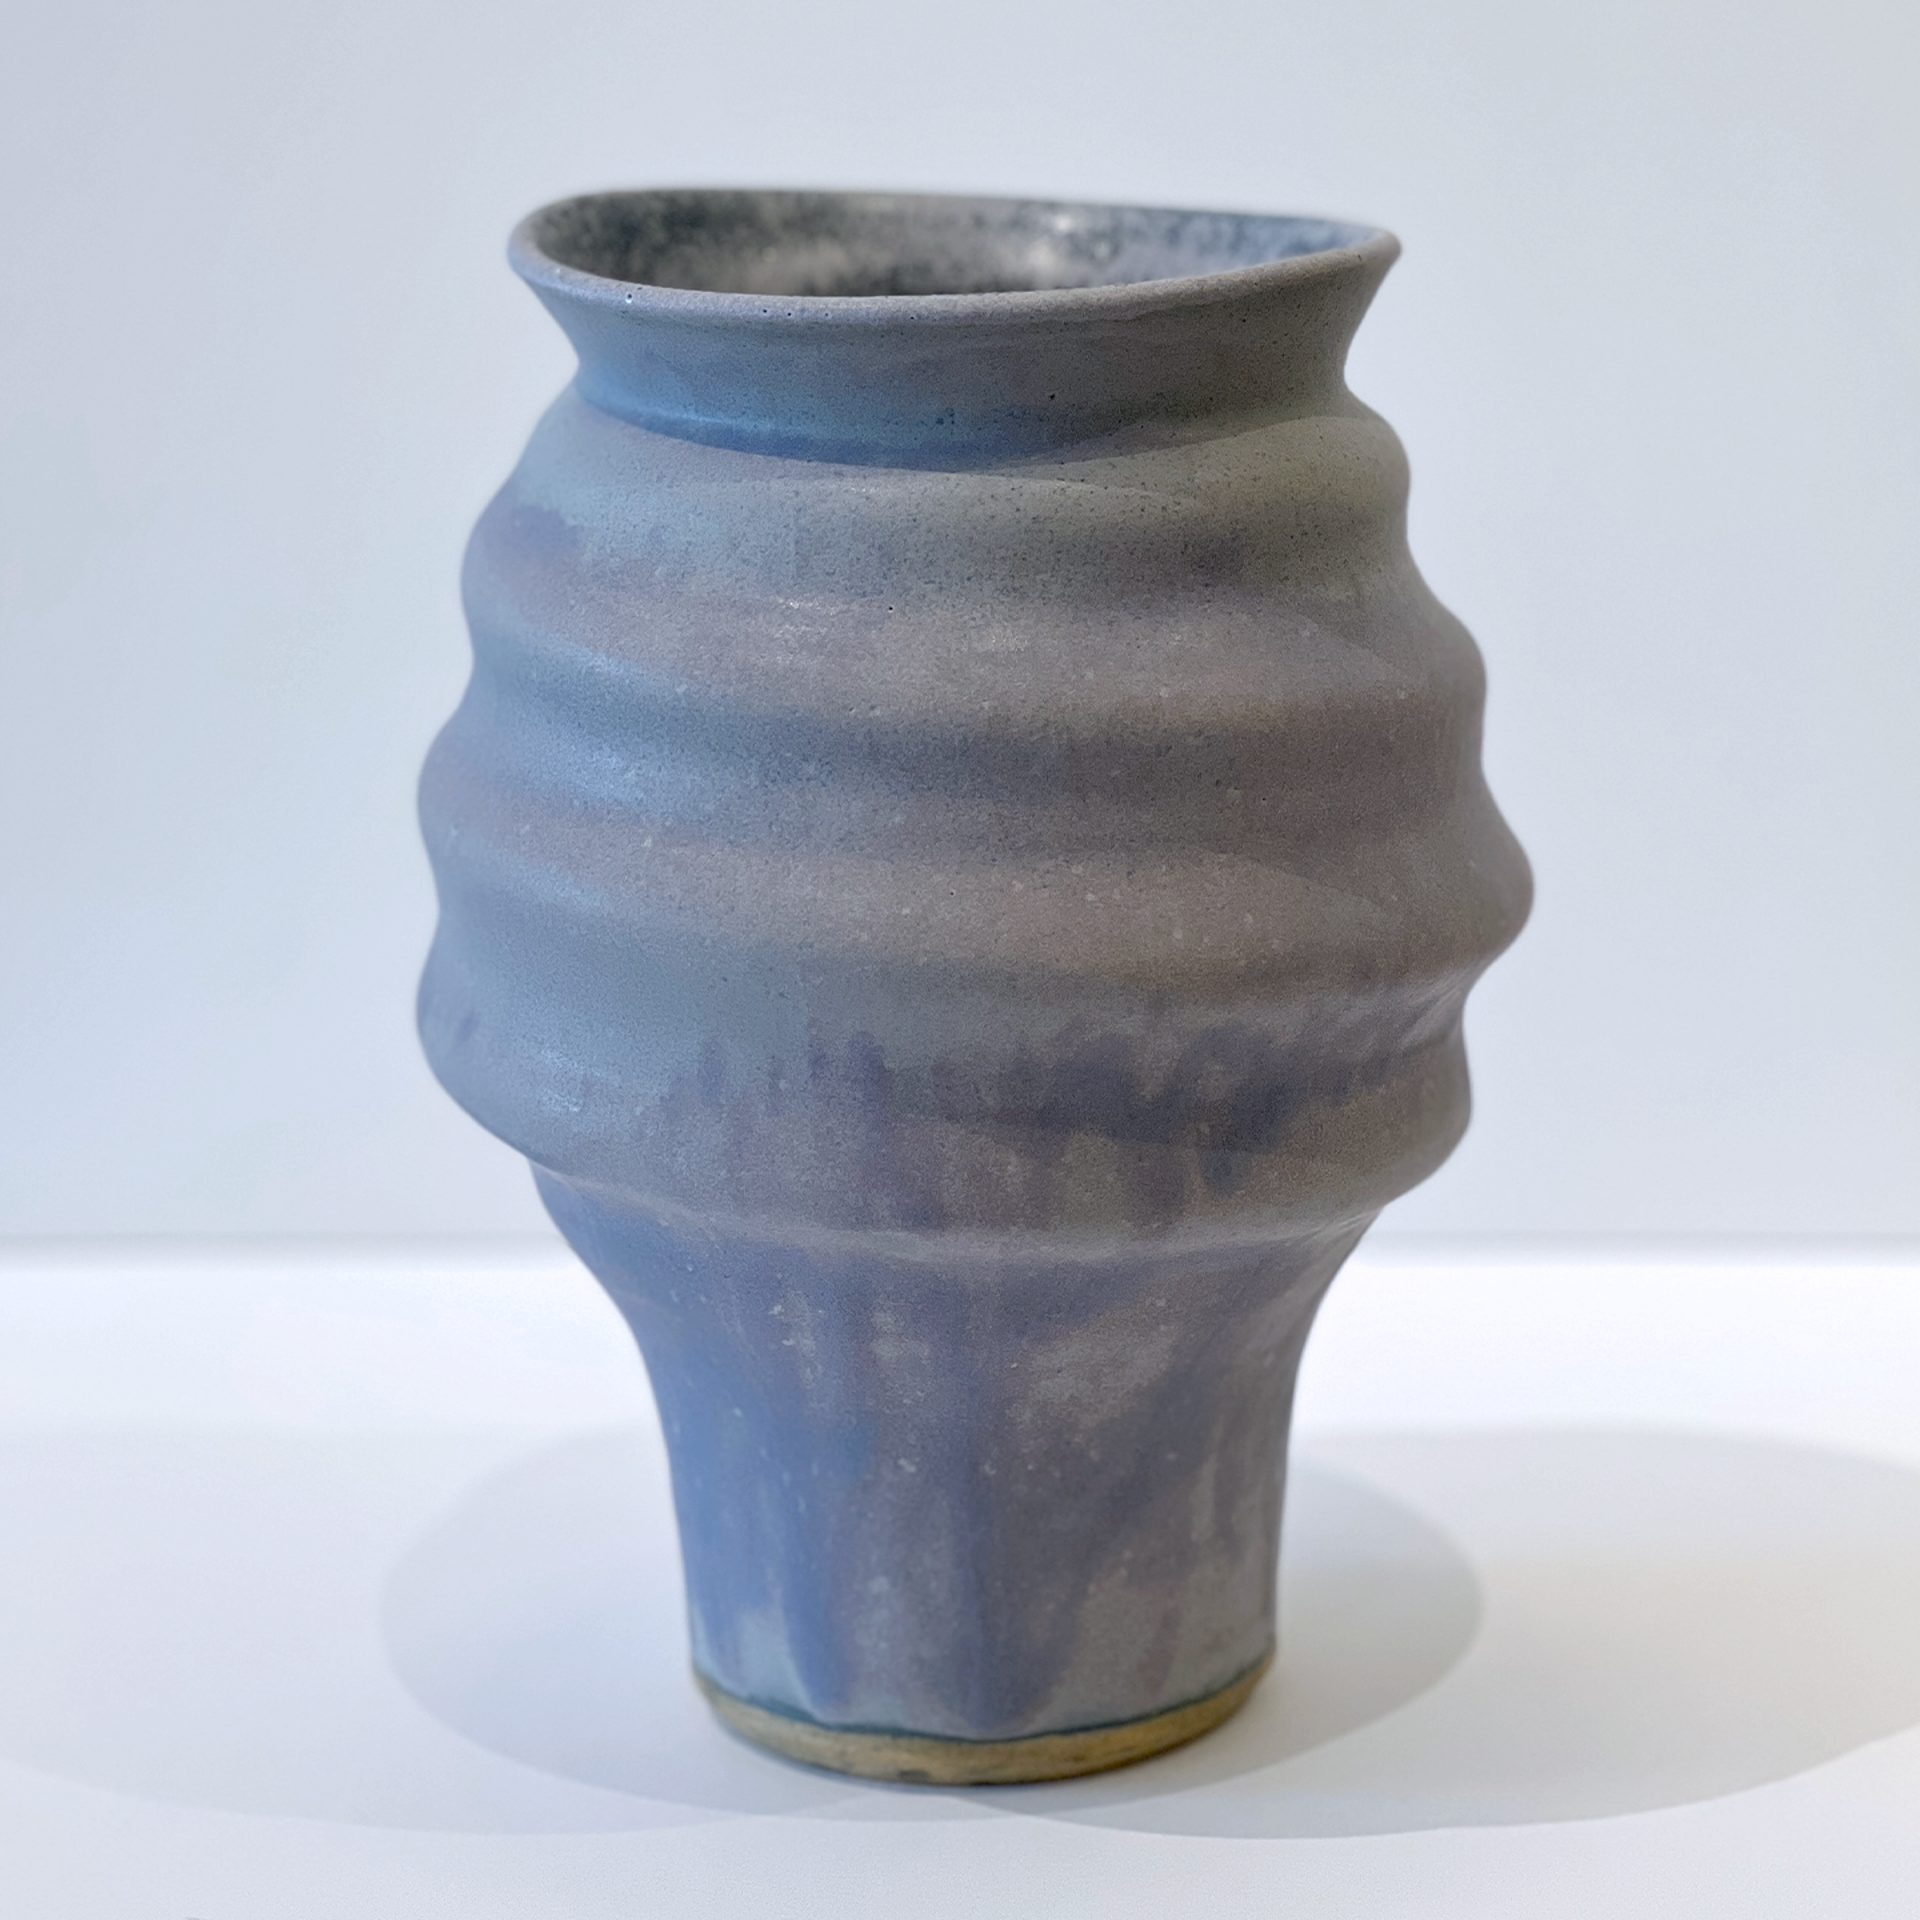 Vase 16 by David LaLomia